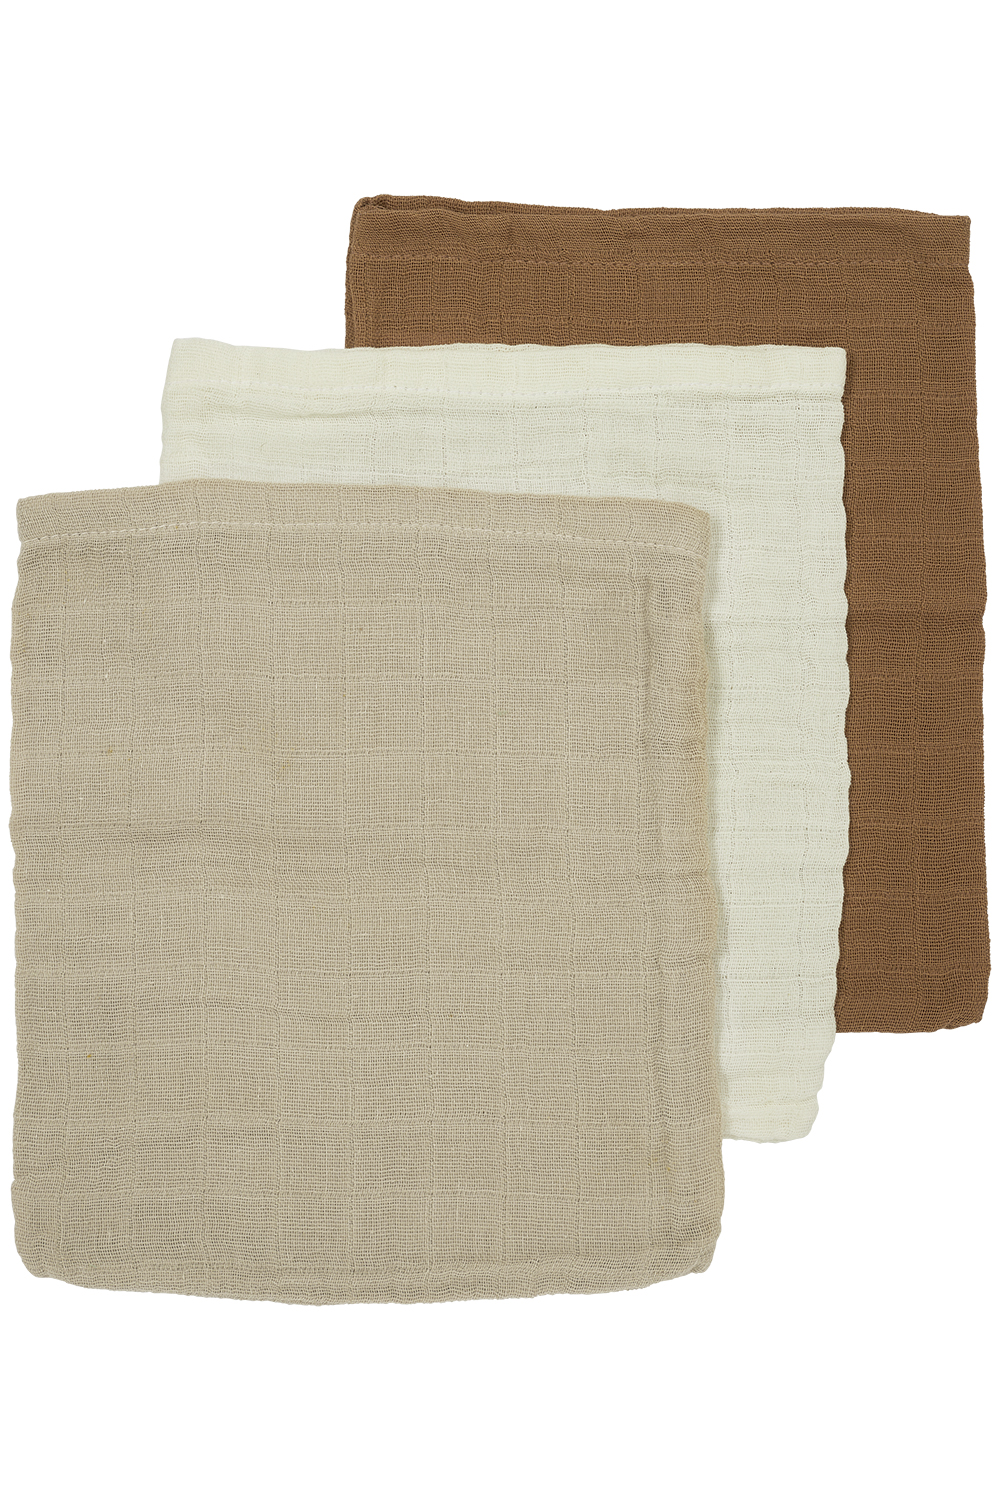 Washcloth 3-pack muslin Uni - offwhite/sand/toffee - 20x17cm